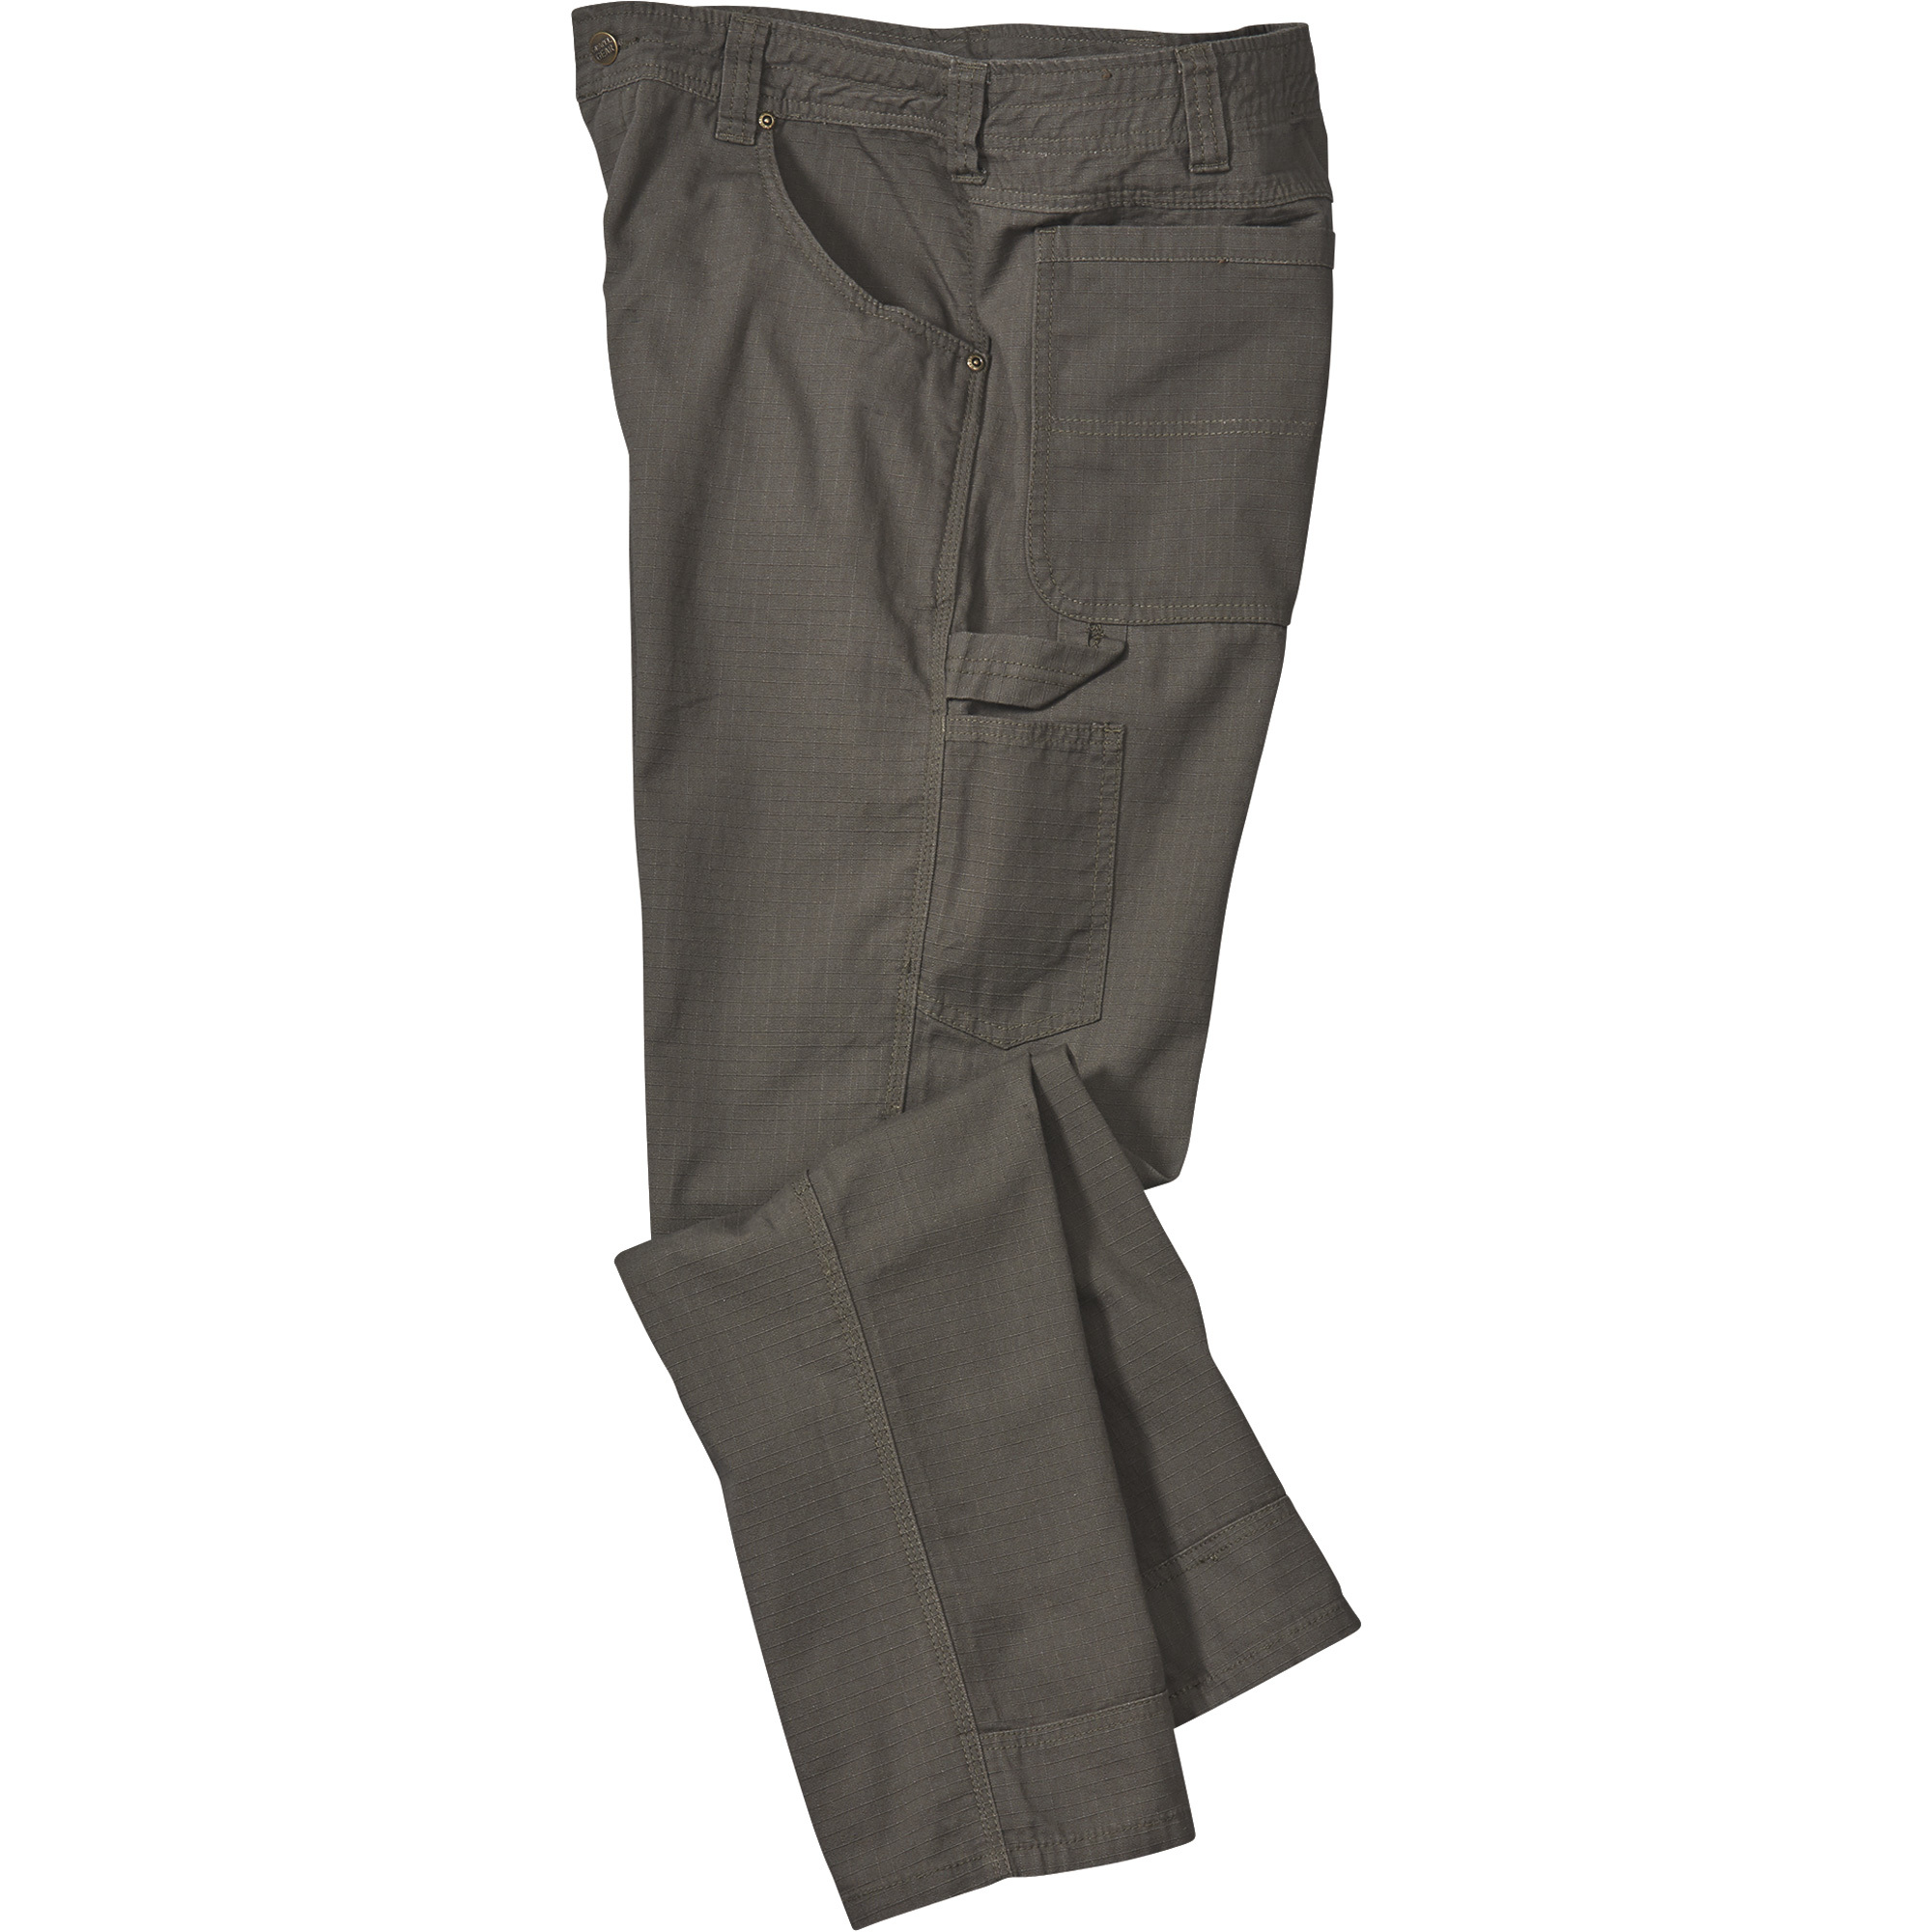 Gravel Gear Men's Cotton Ripstop Carpenter Pants with Teflon Fabric Protector â Moss, 44Inch Waist x 32Inch Inseam